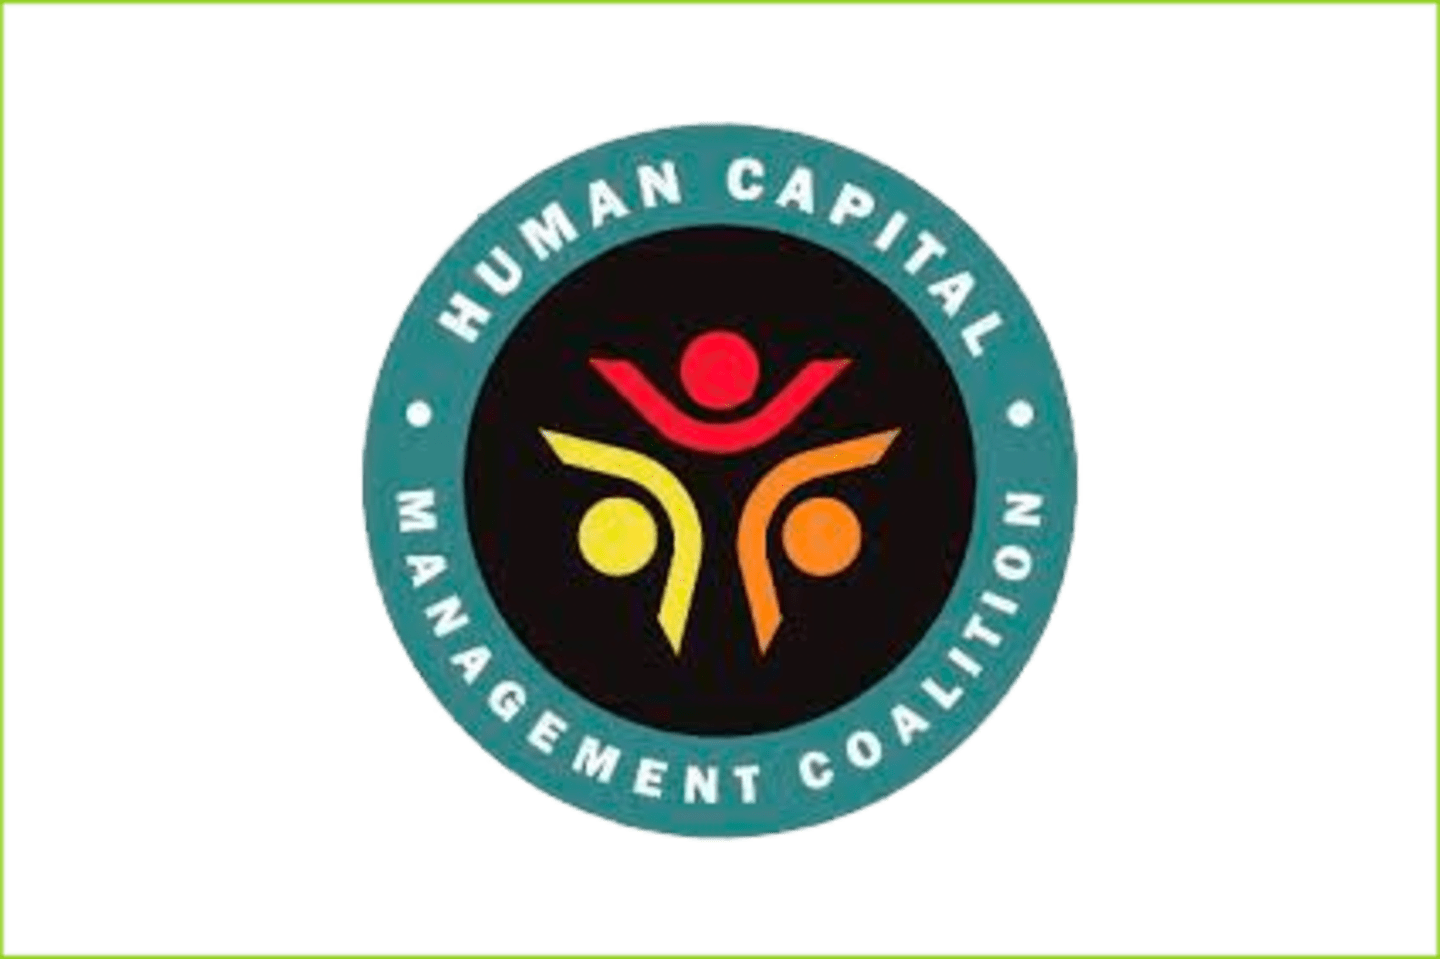 Human Capital Management Coalition logo